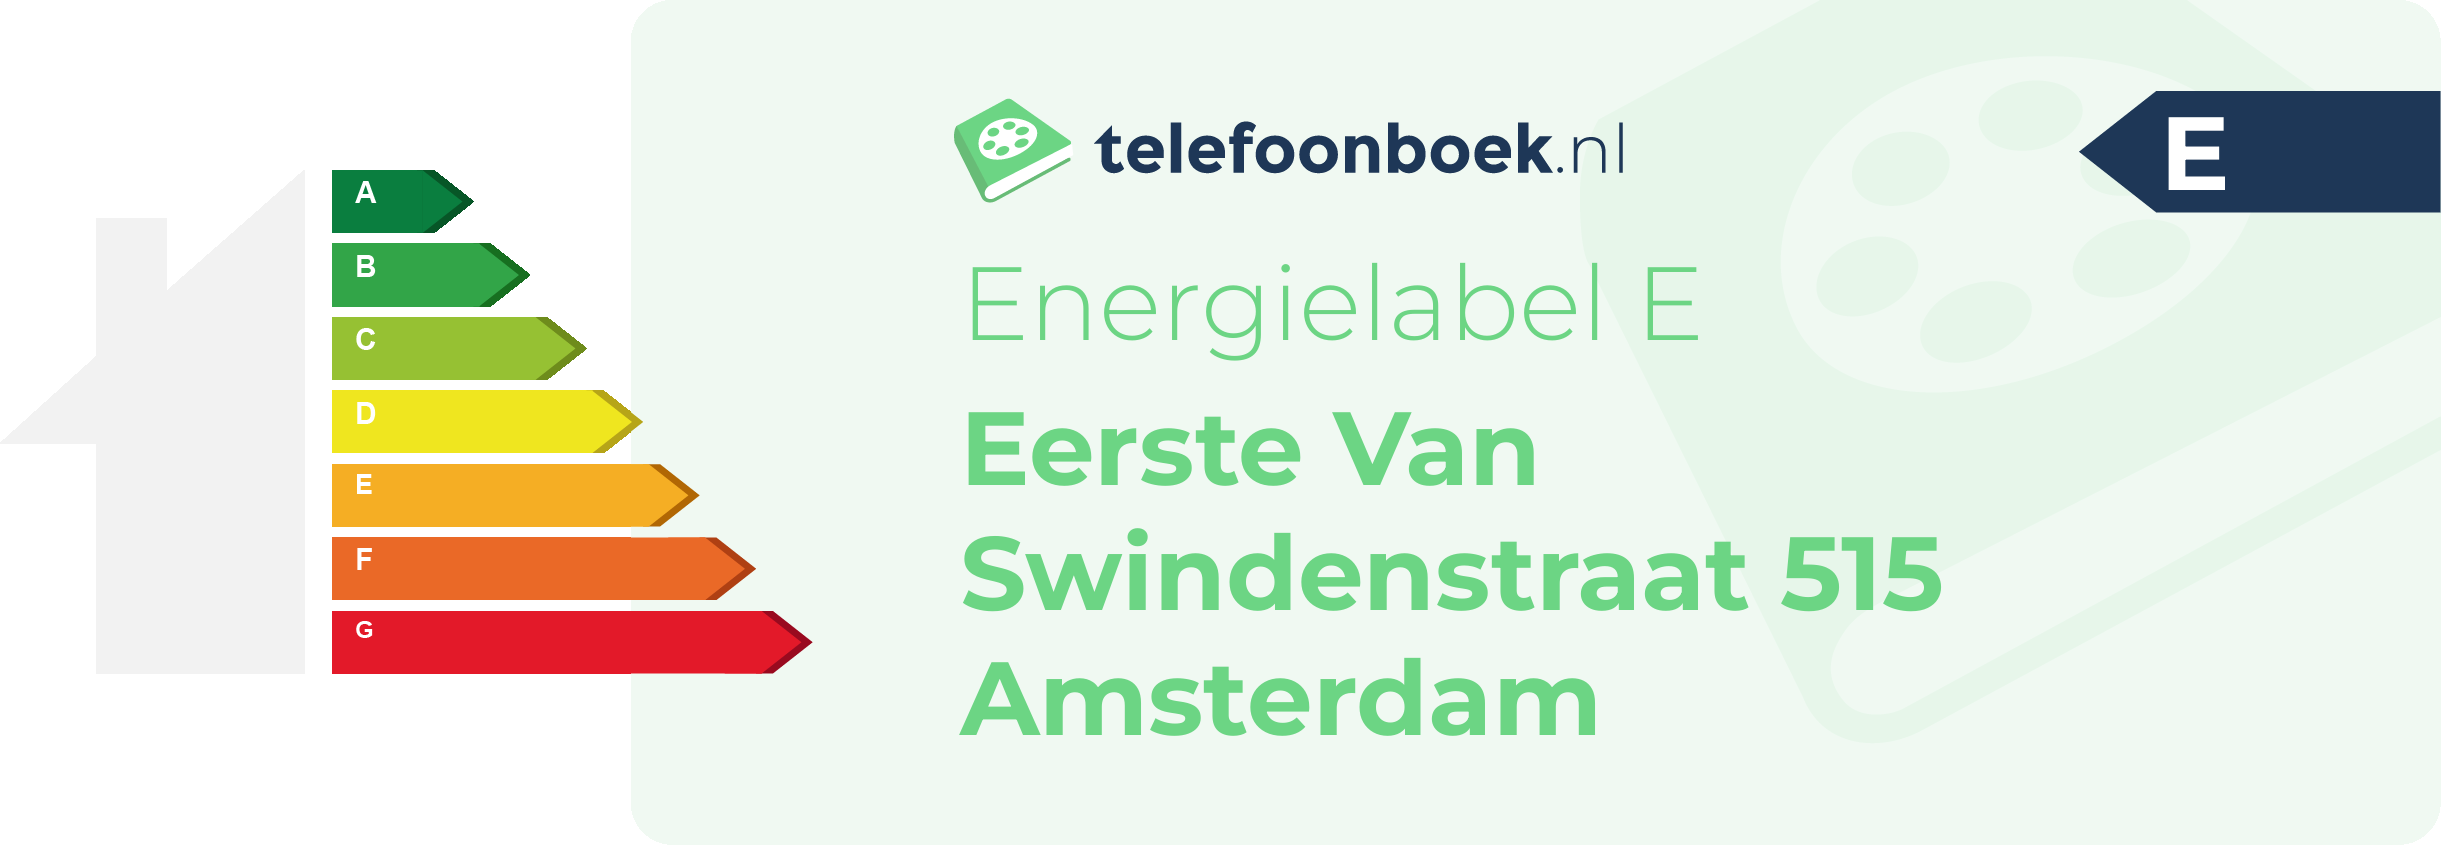 Energielabel Eerste Van Swindenstraat 515 Amsterdam